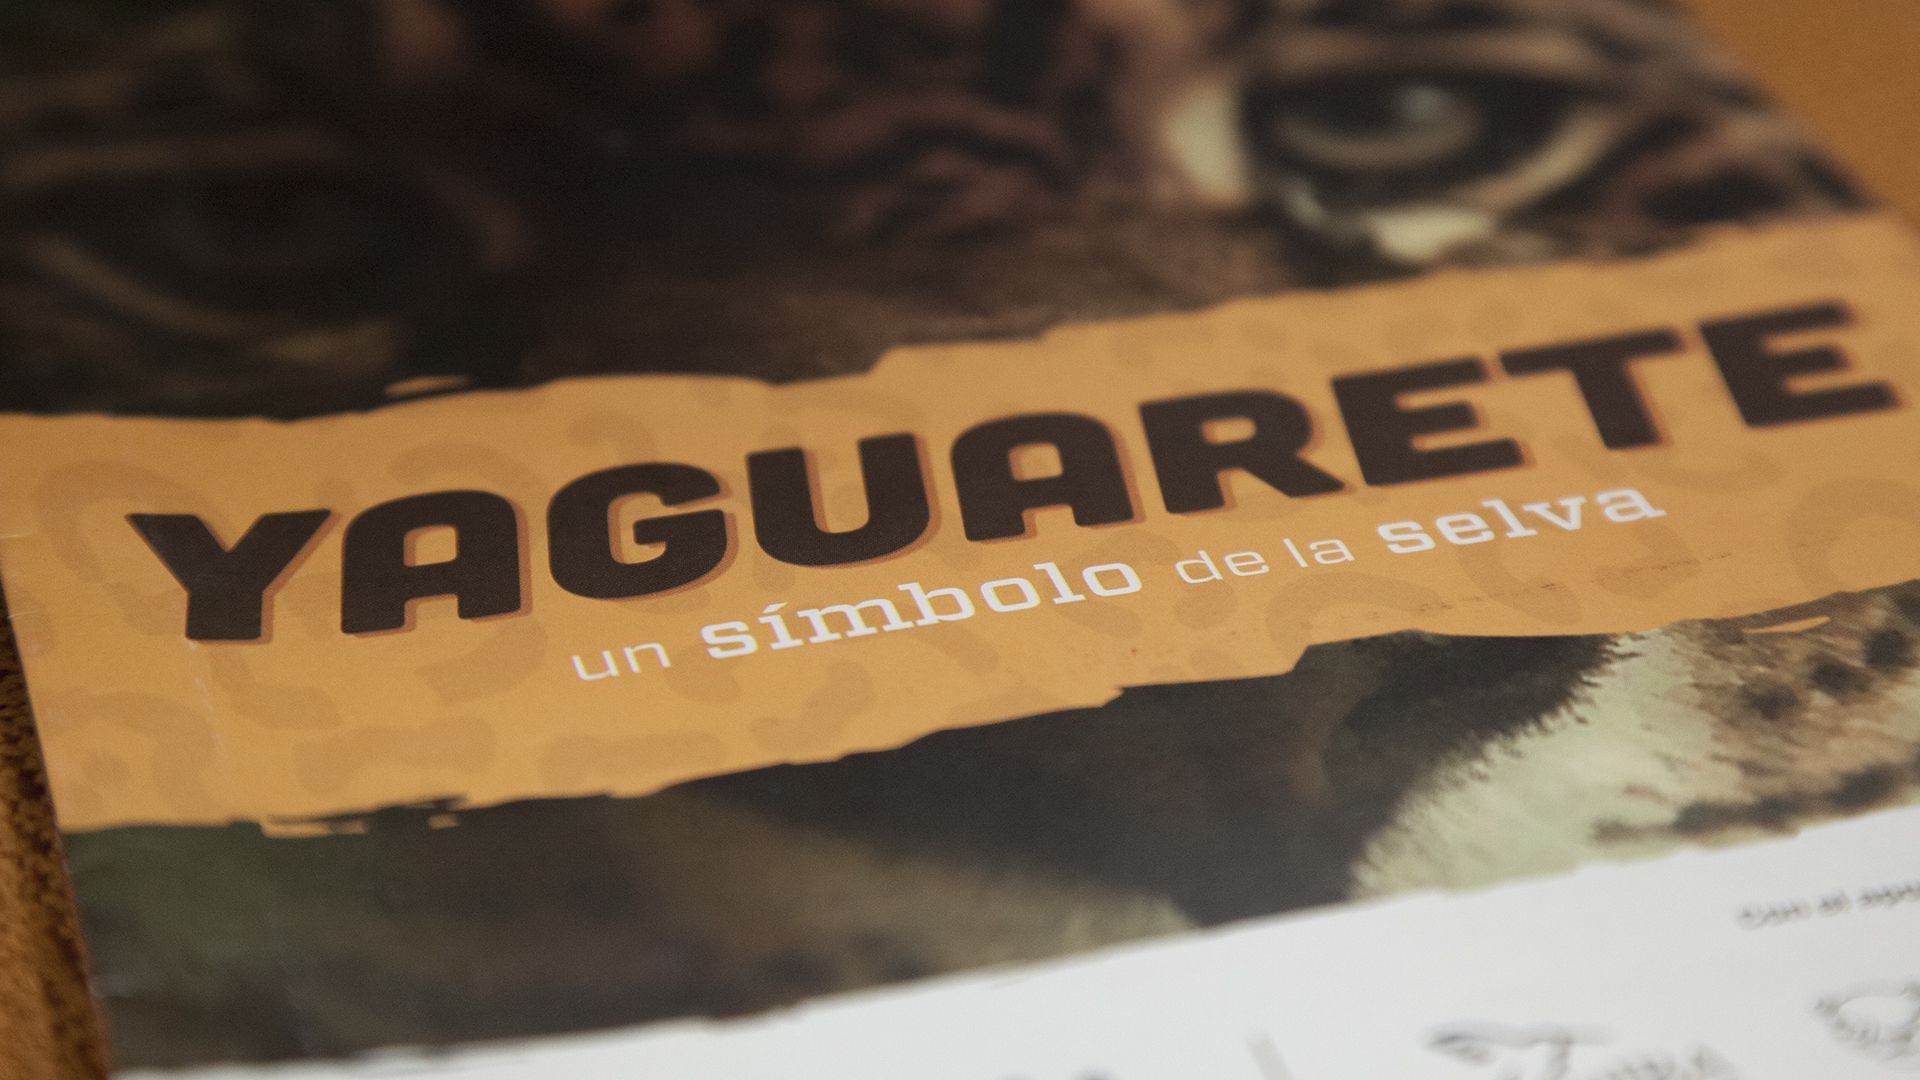 Portada del libro “Yaguareté, un símbolo de la selva” (Santiago Saferstein)